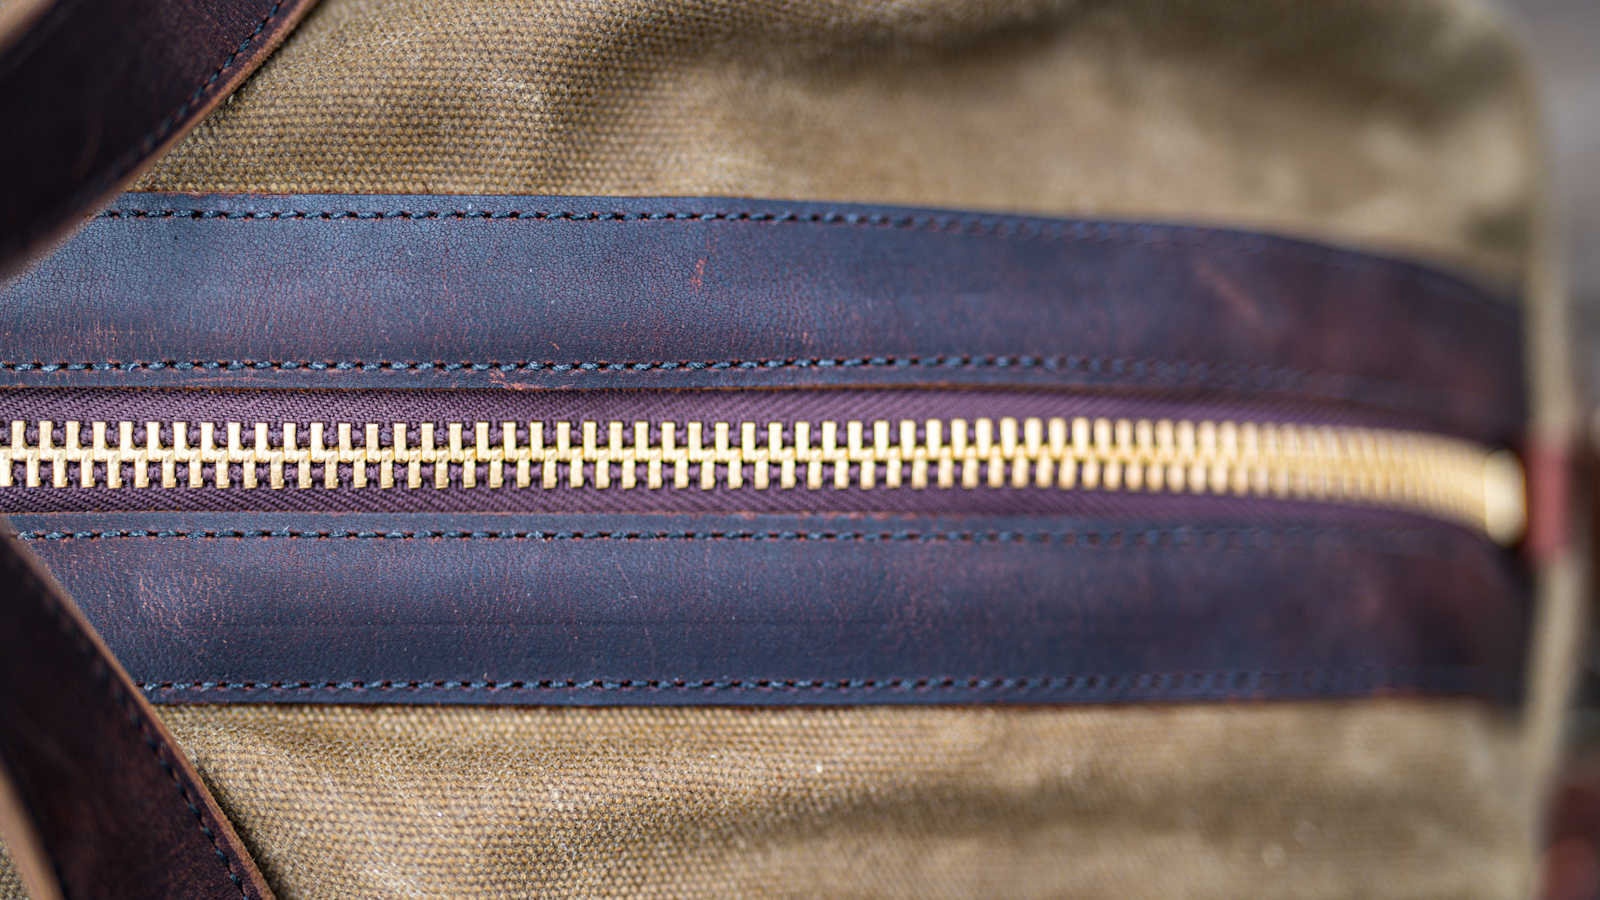 Vermilyea Pelle: Luxurious Handmade Leather Goods from the Heart of Washington